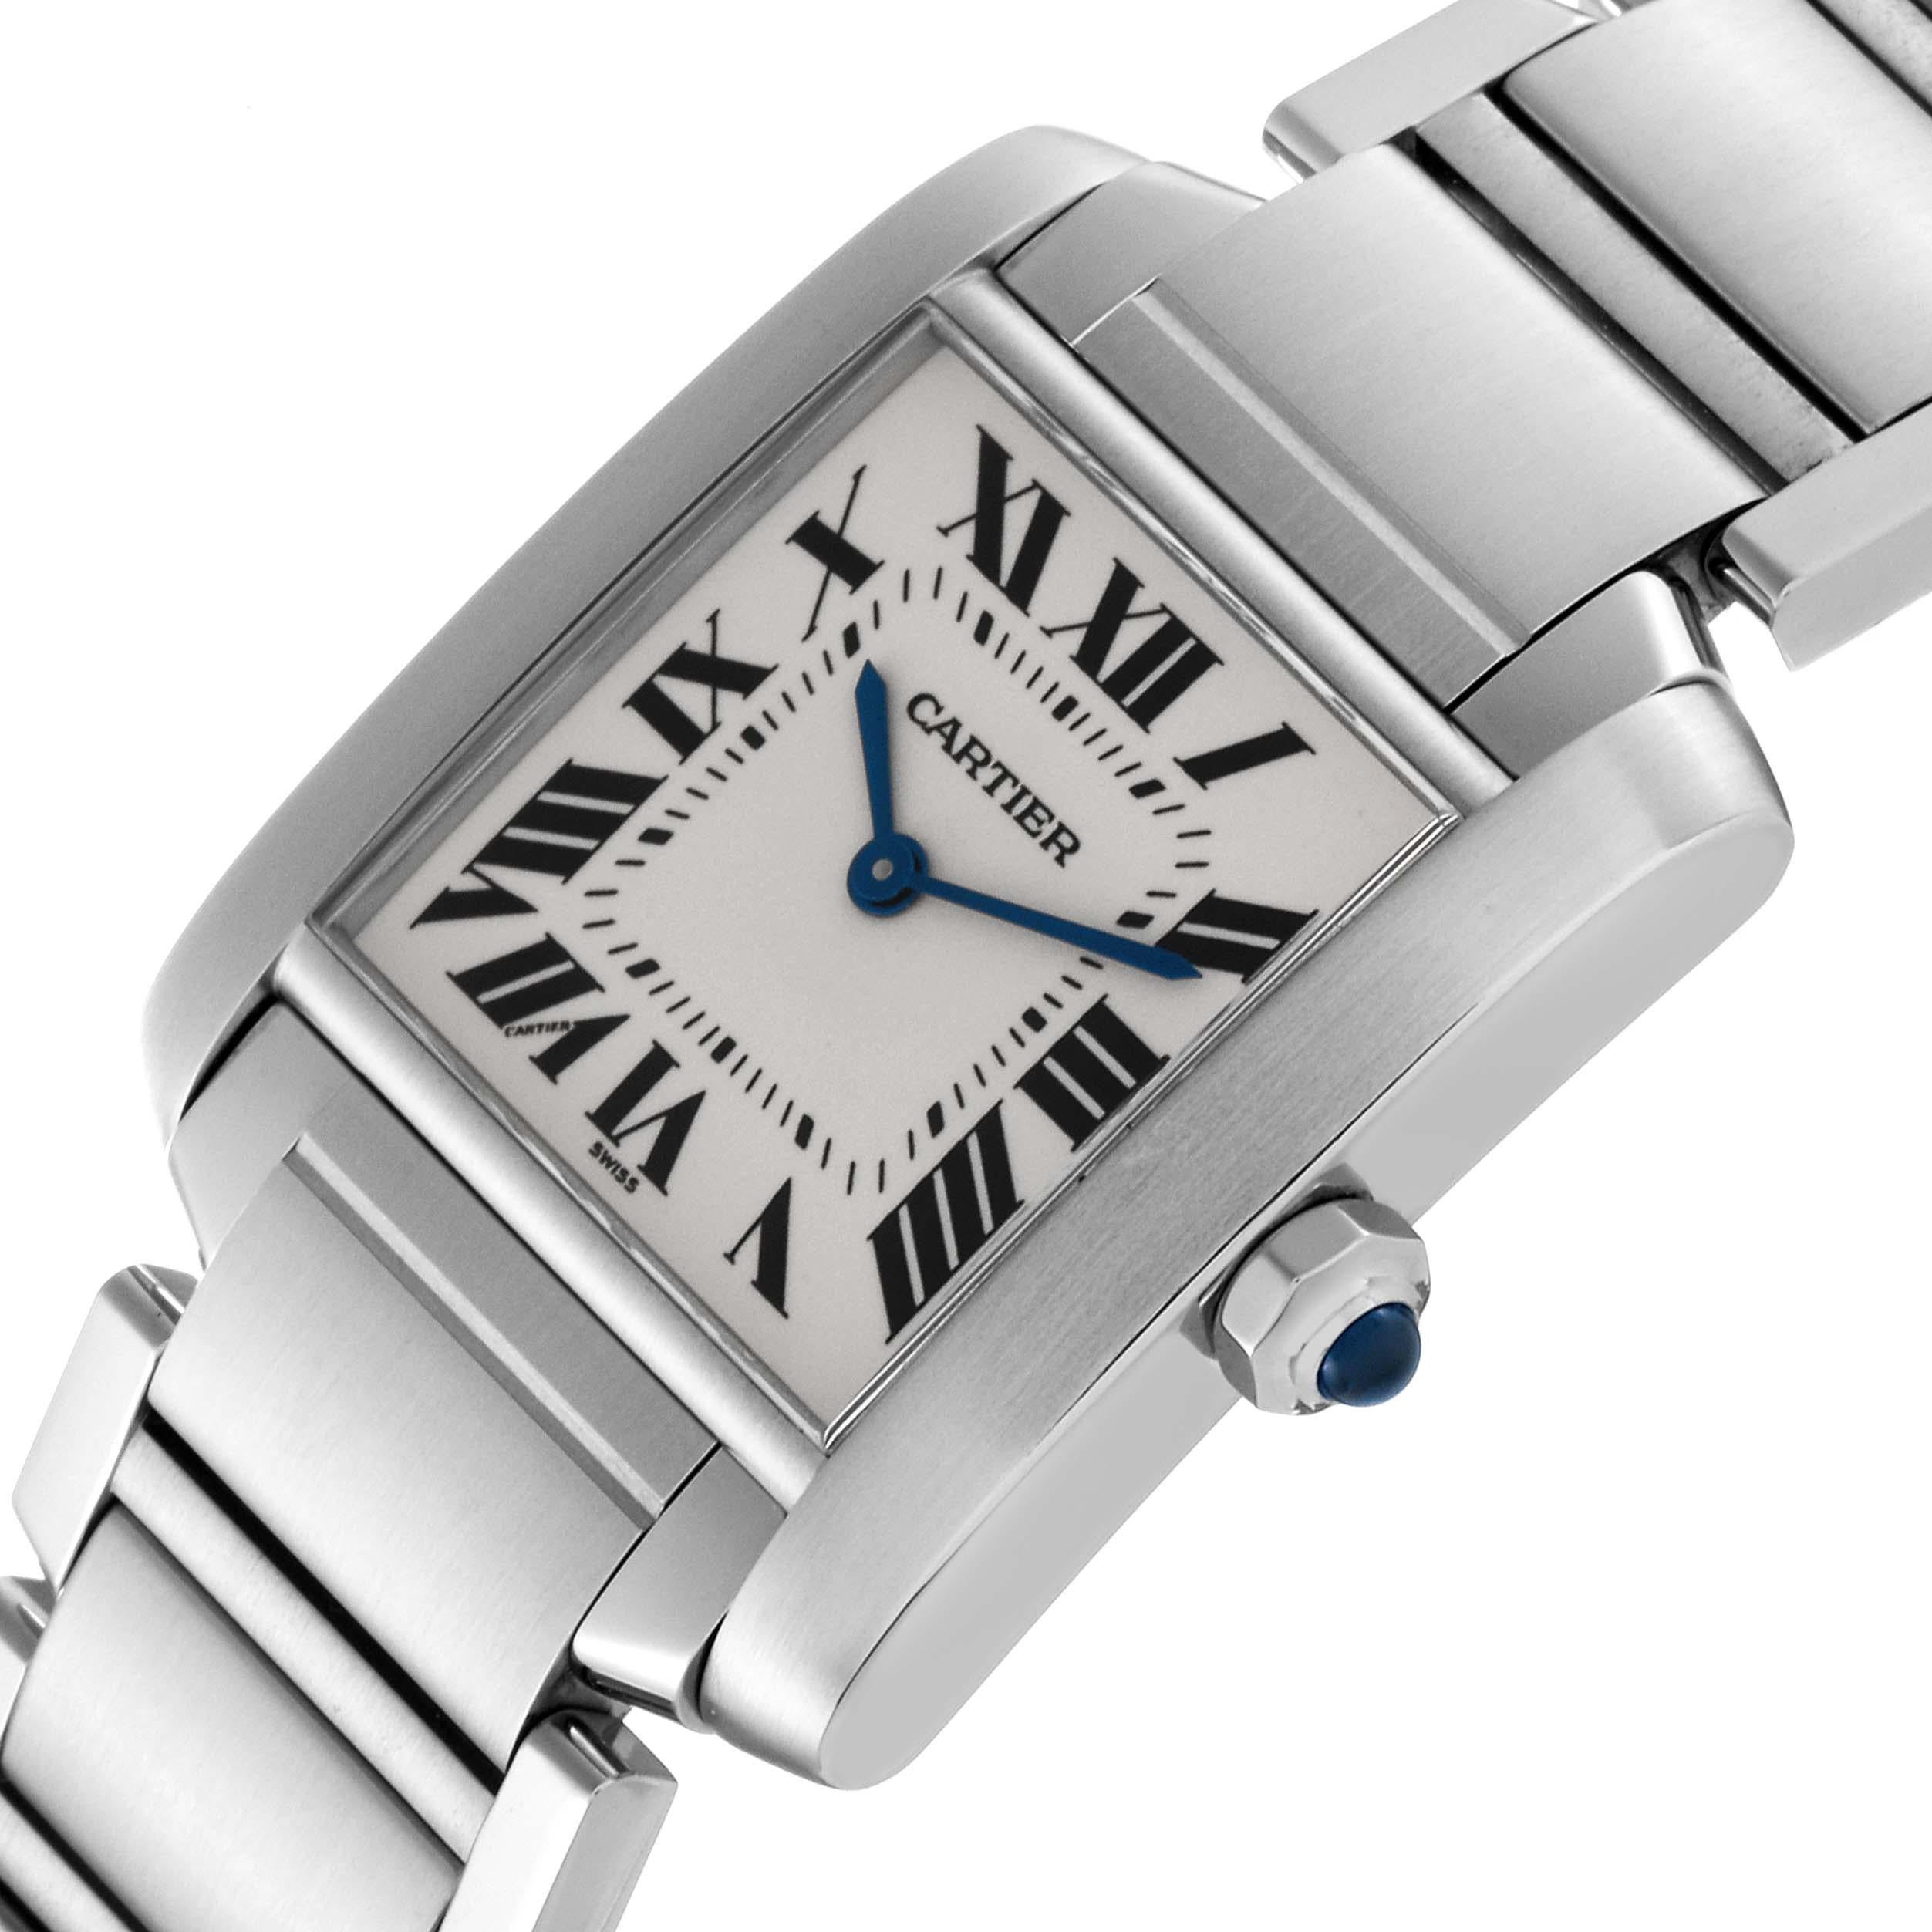 Cartier Tank Francaise Midsize Steel Ladies Watch WSTA0005 1